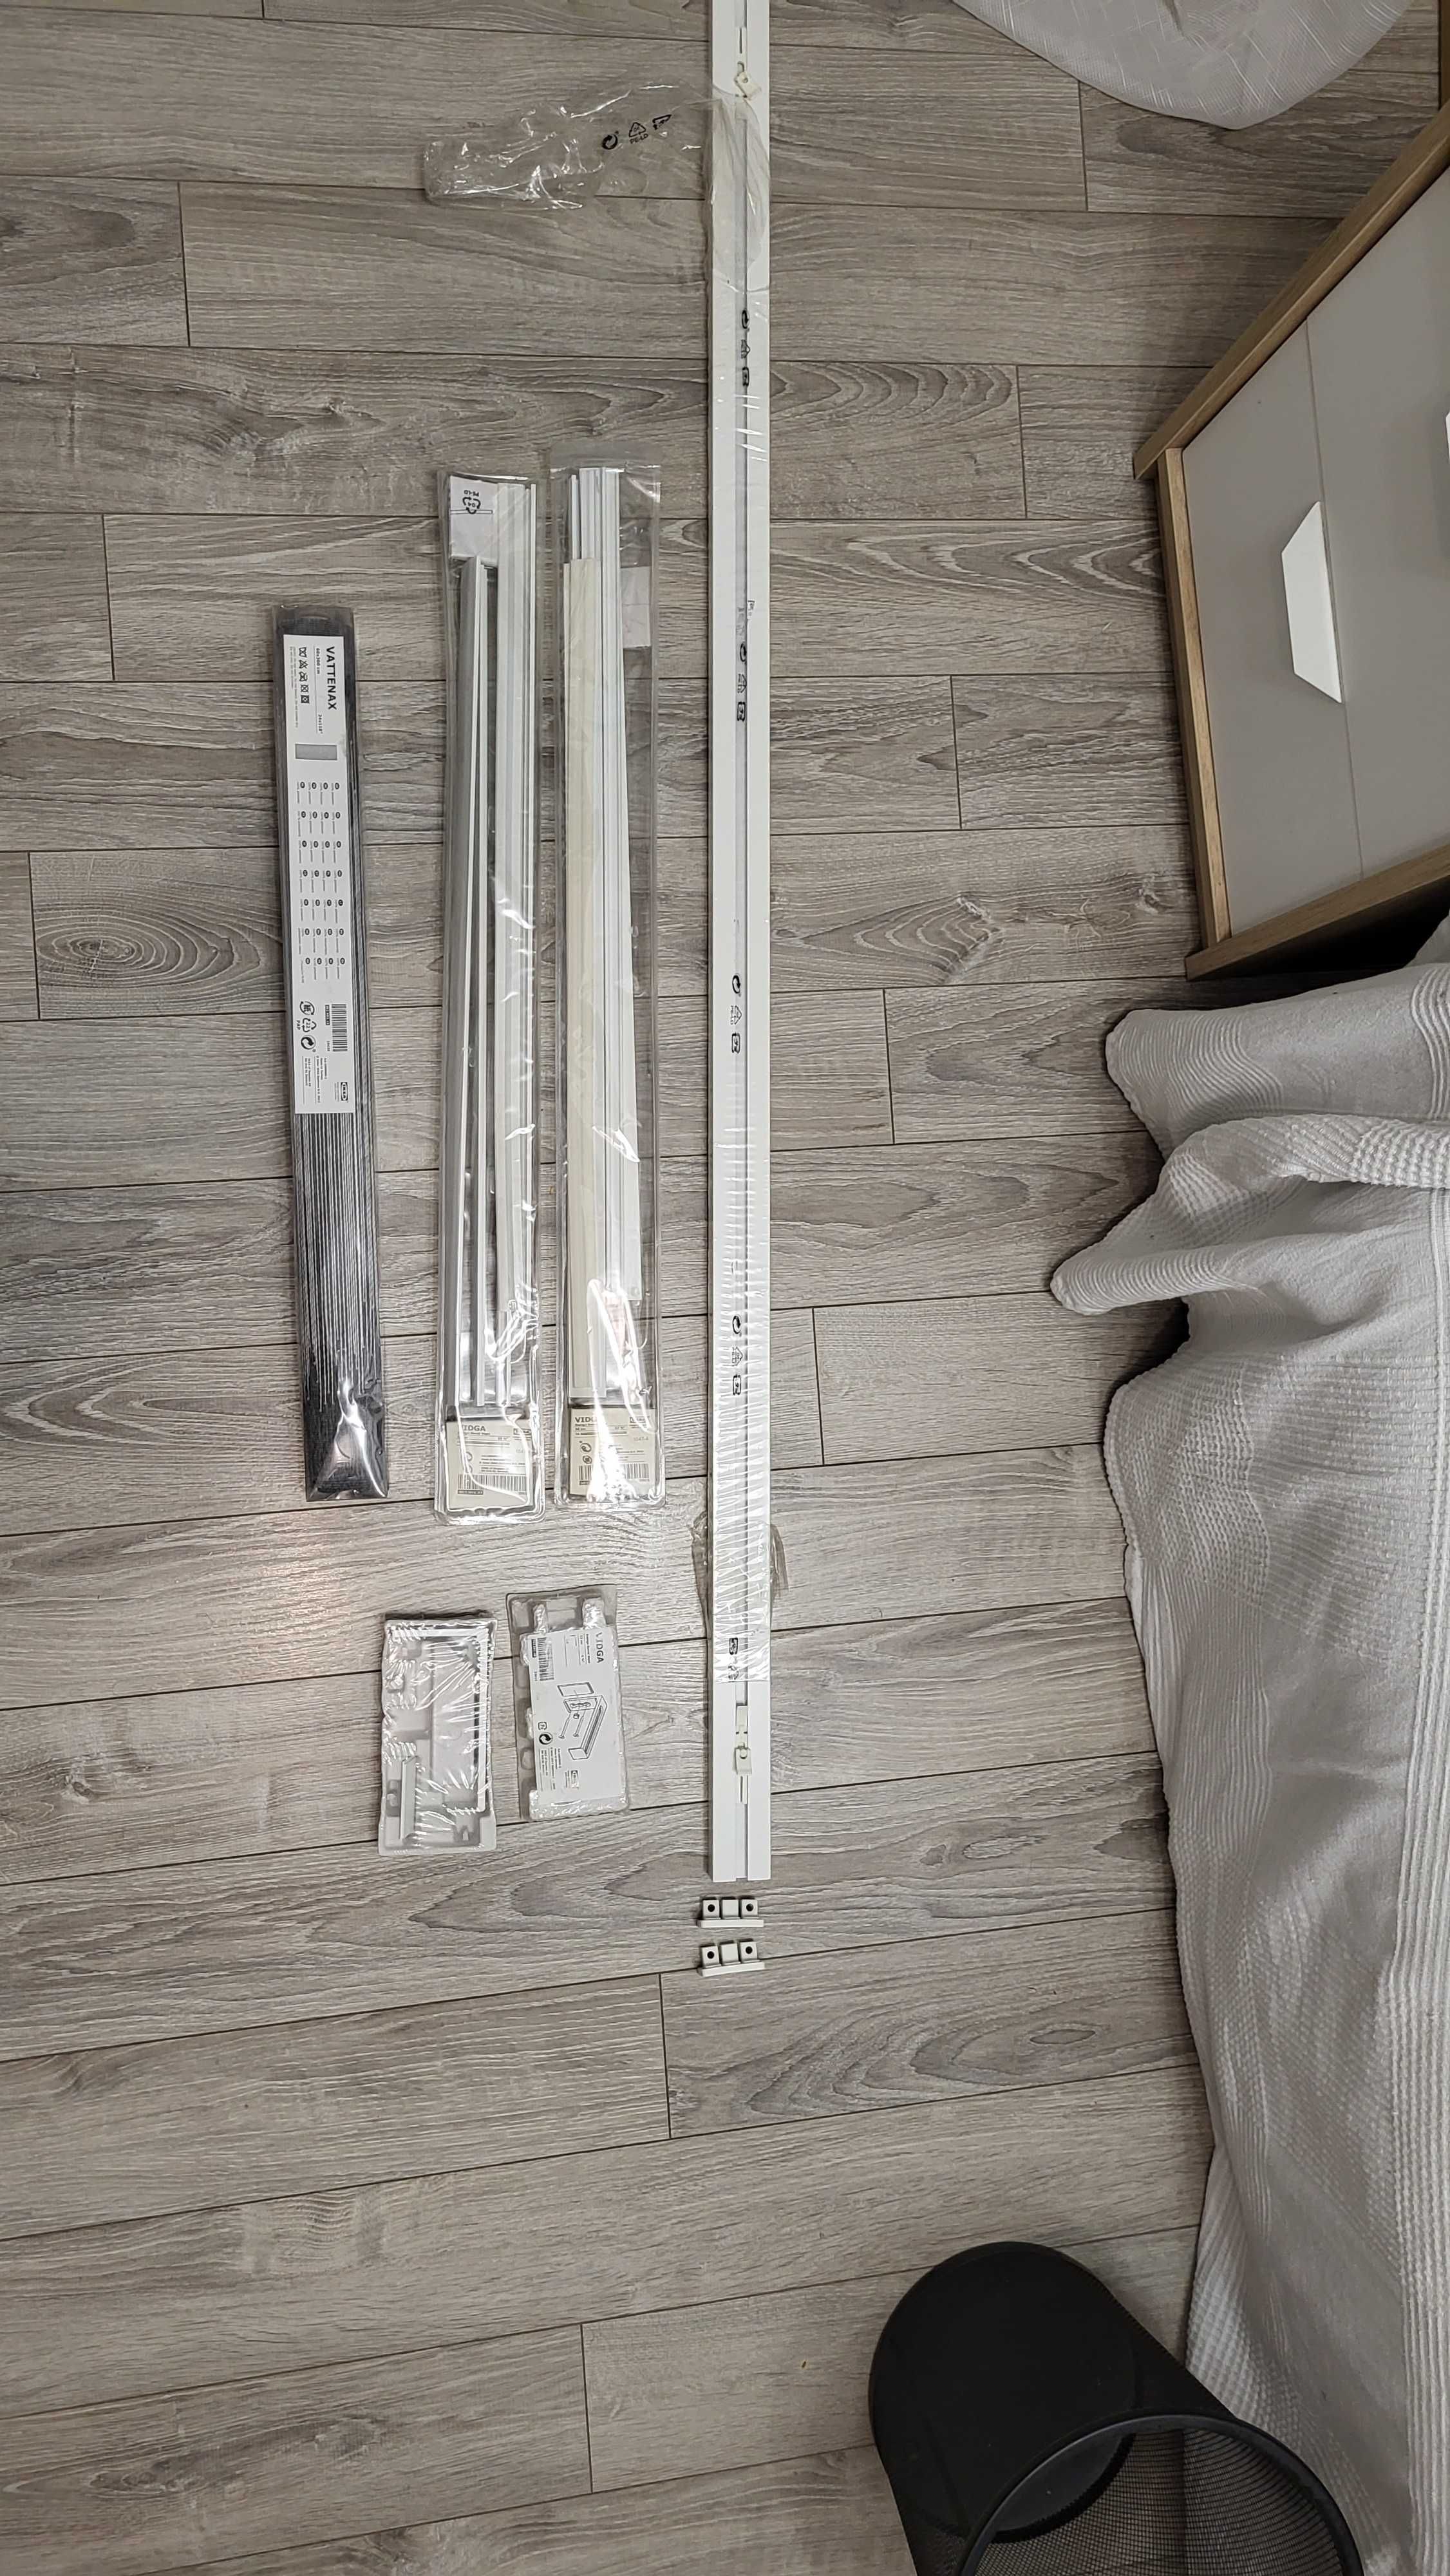 Set draperie panou Ikea